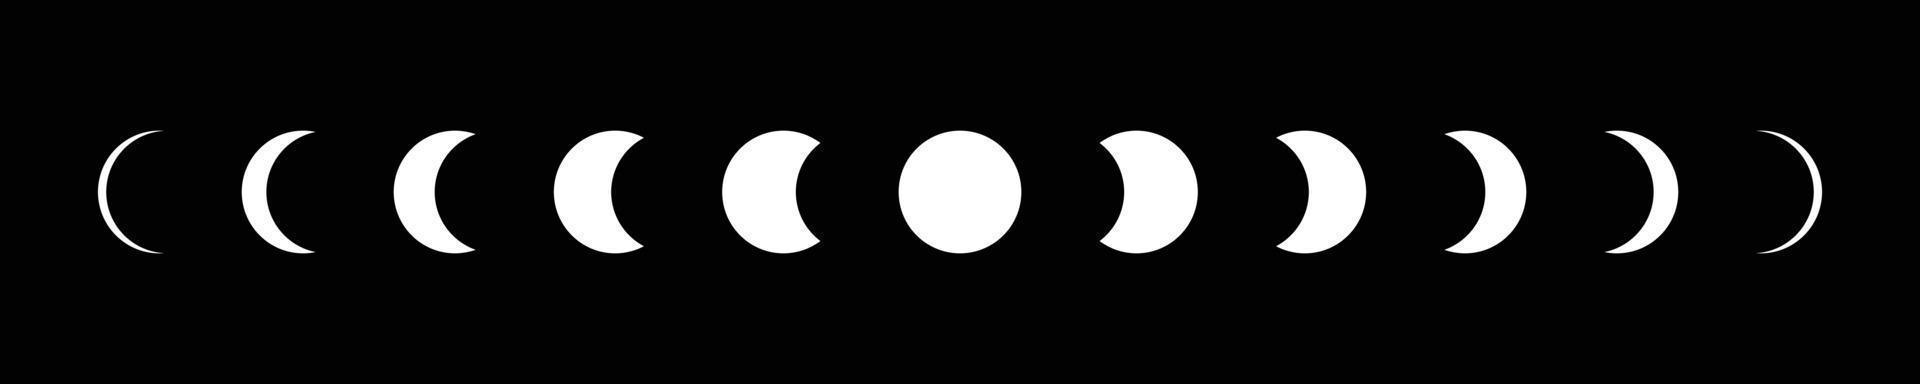 Luna etapas astronomía ciclo vector